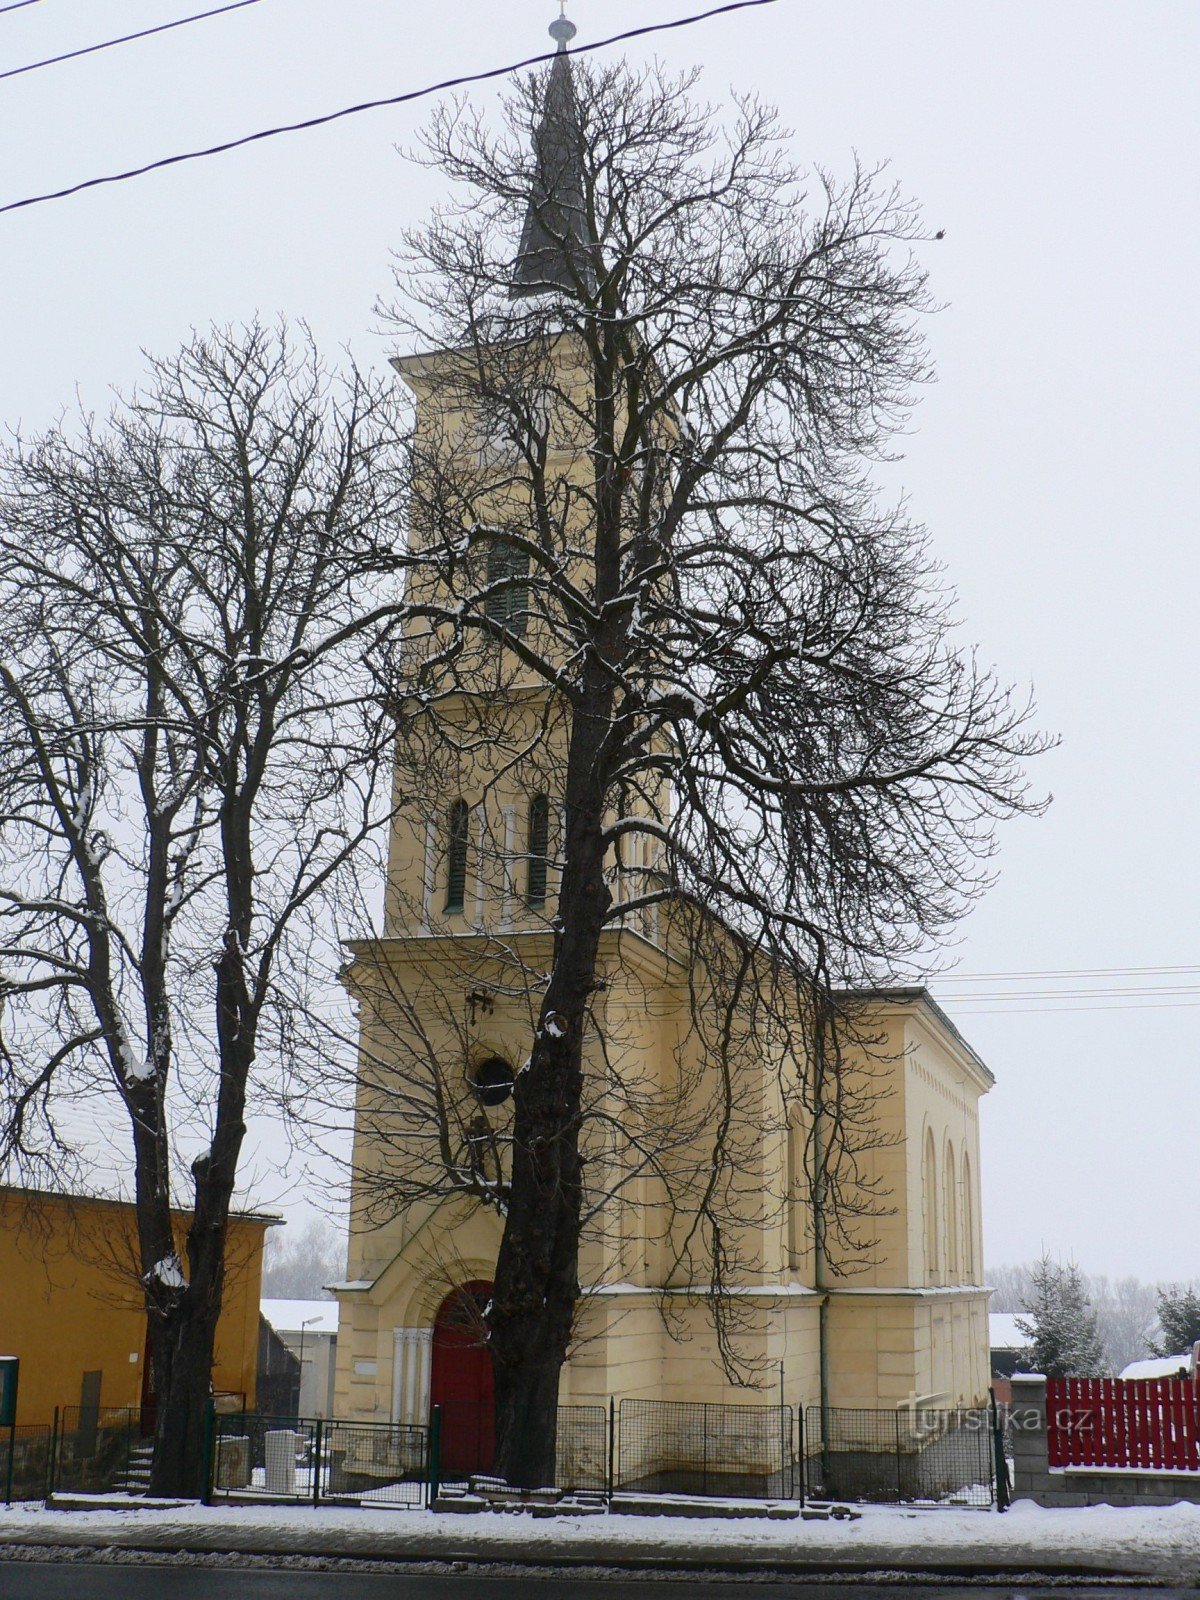 biserica a fost fotografiata prost - este ascunsa in spatele copacilor